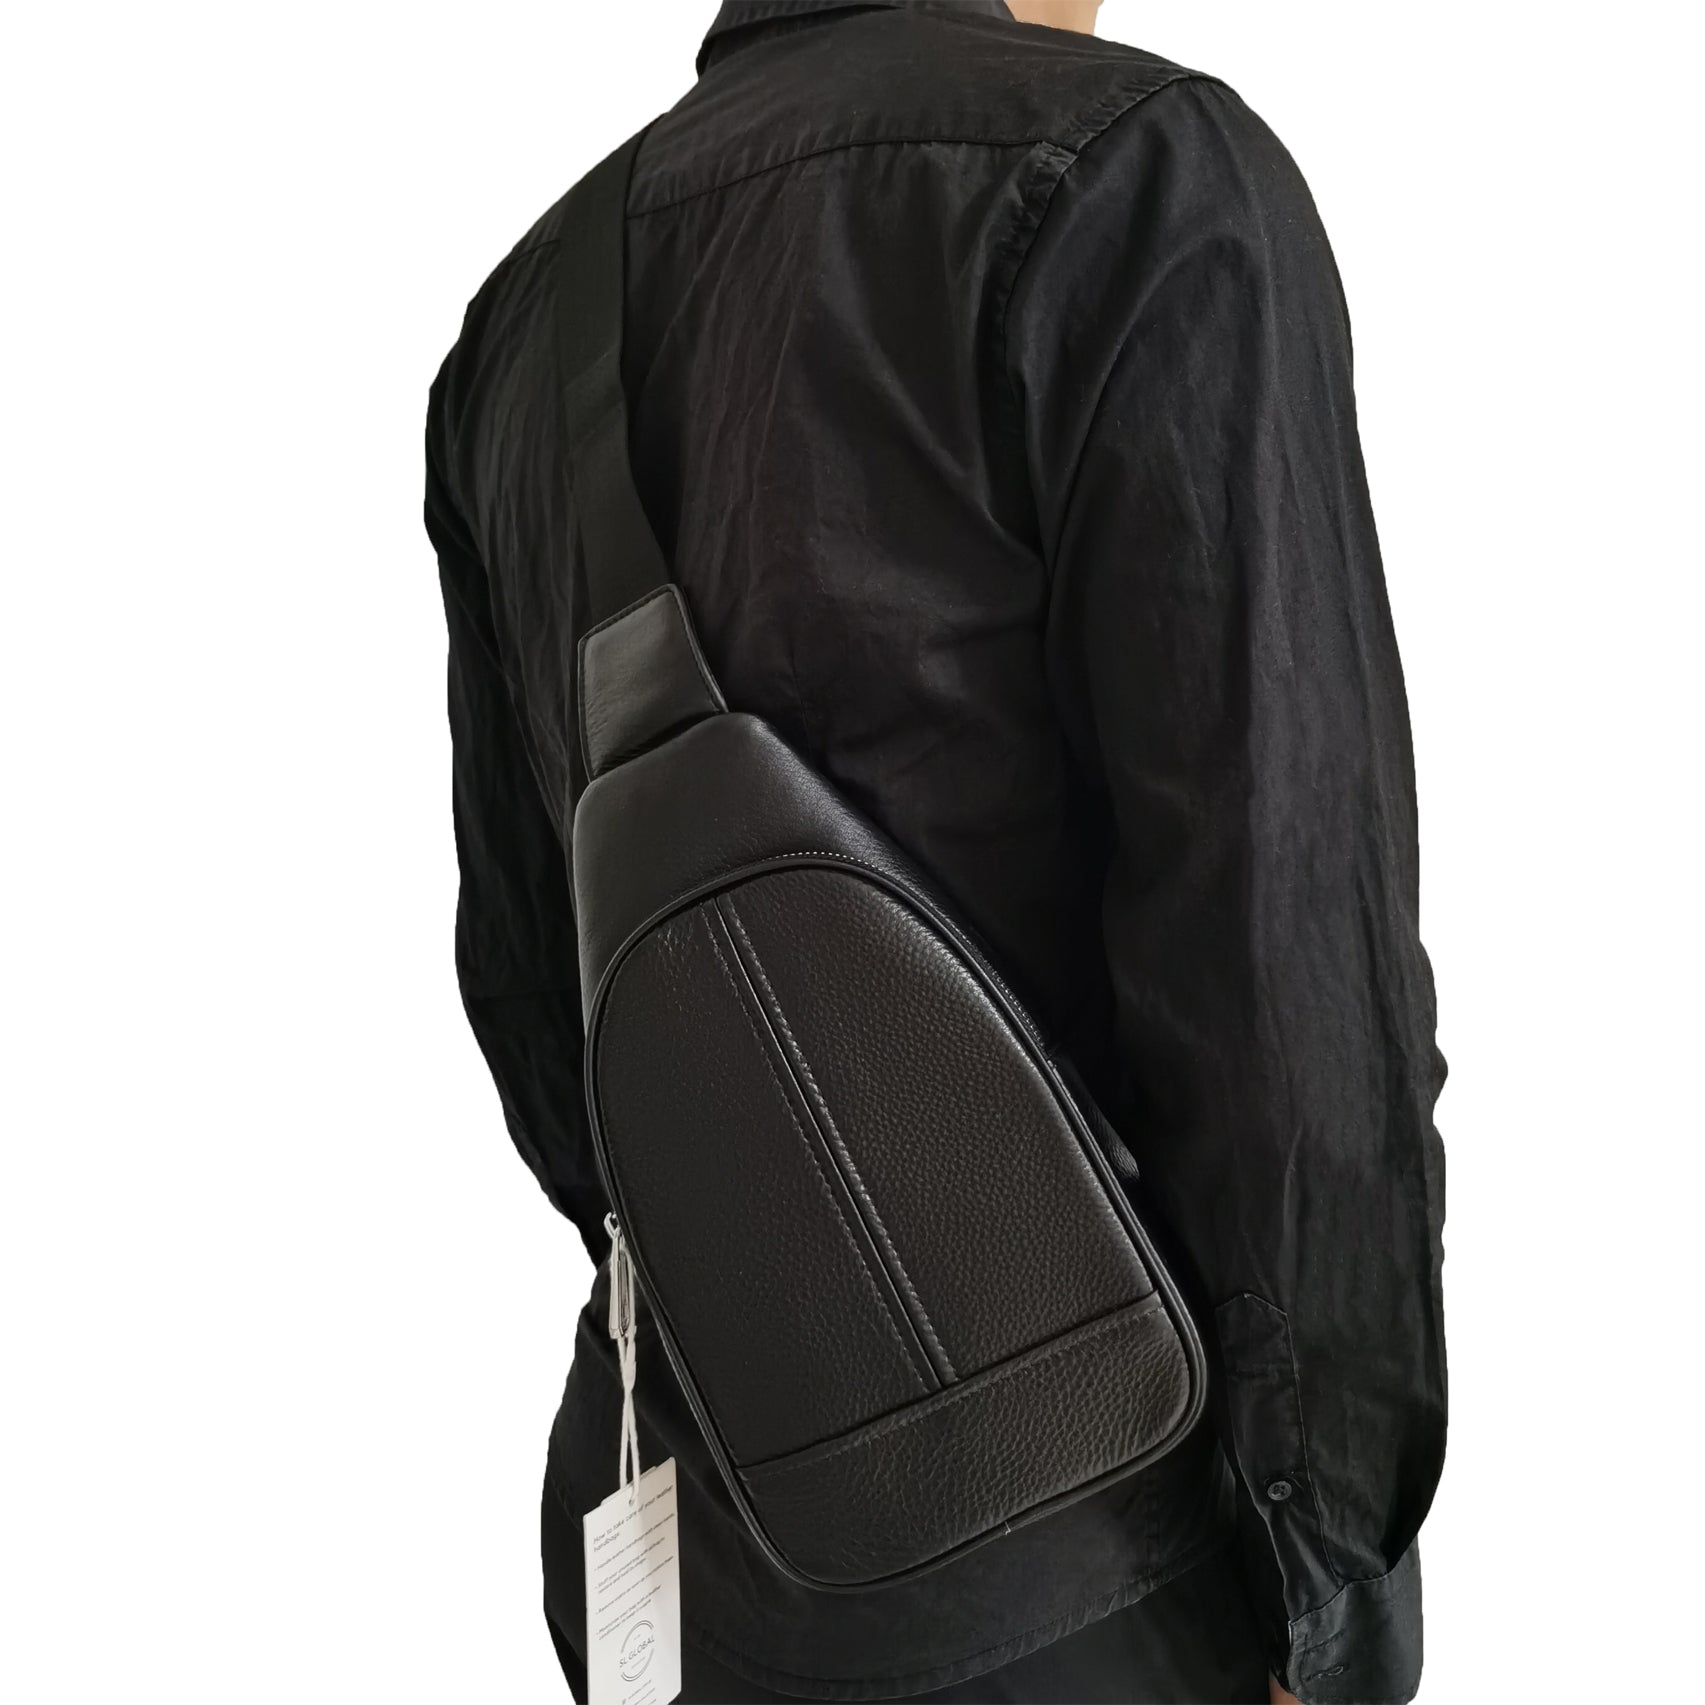 Unisex genuine cowhide leather Seam design fanny pack waist bag by Tomorrow Closet